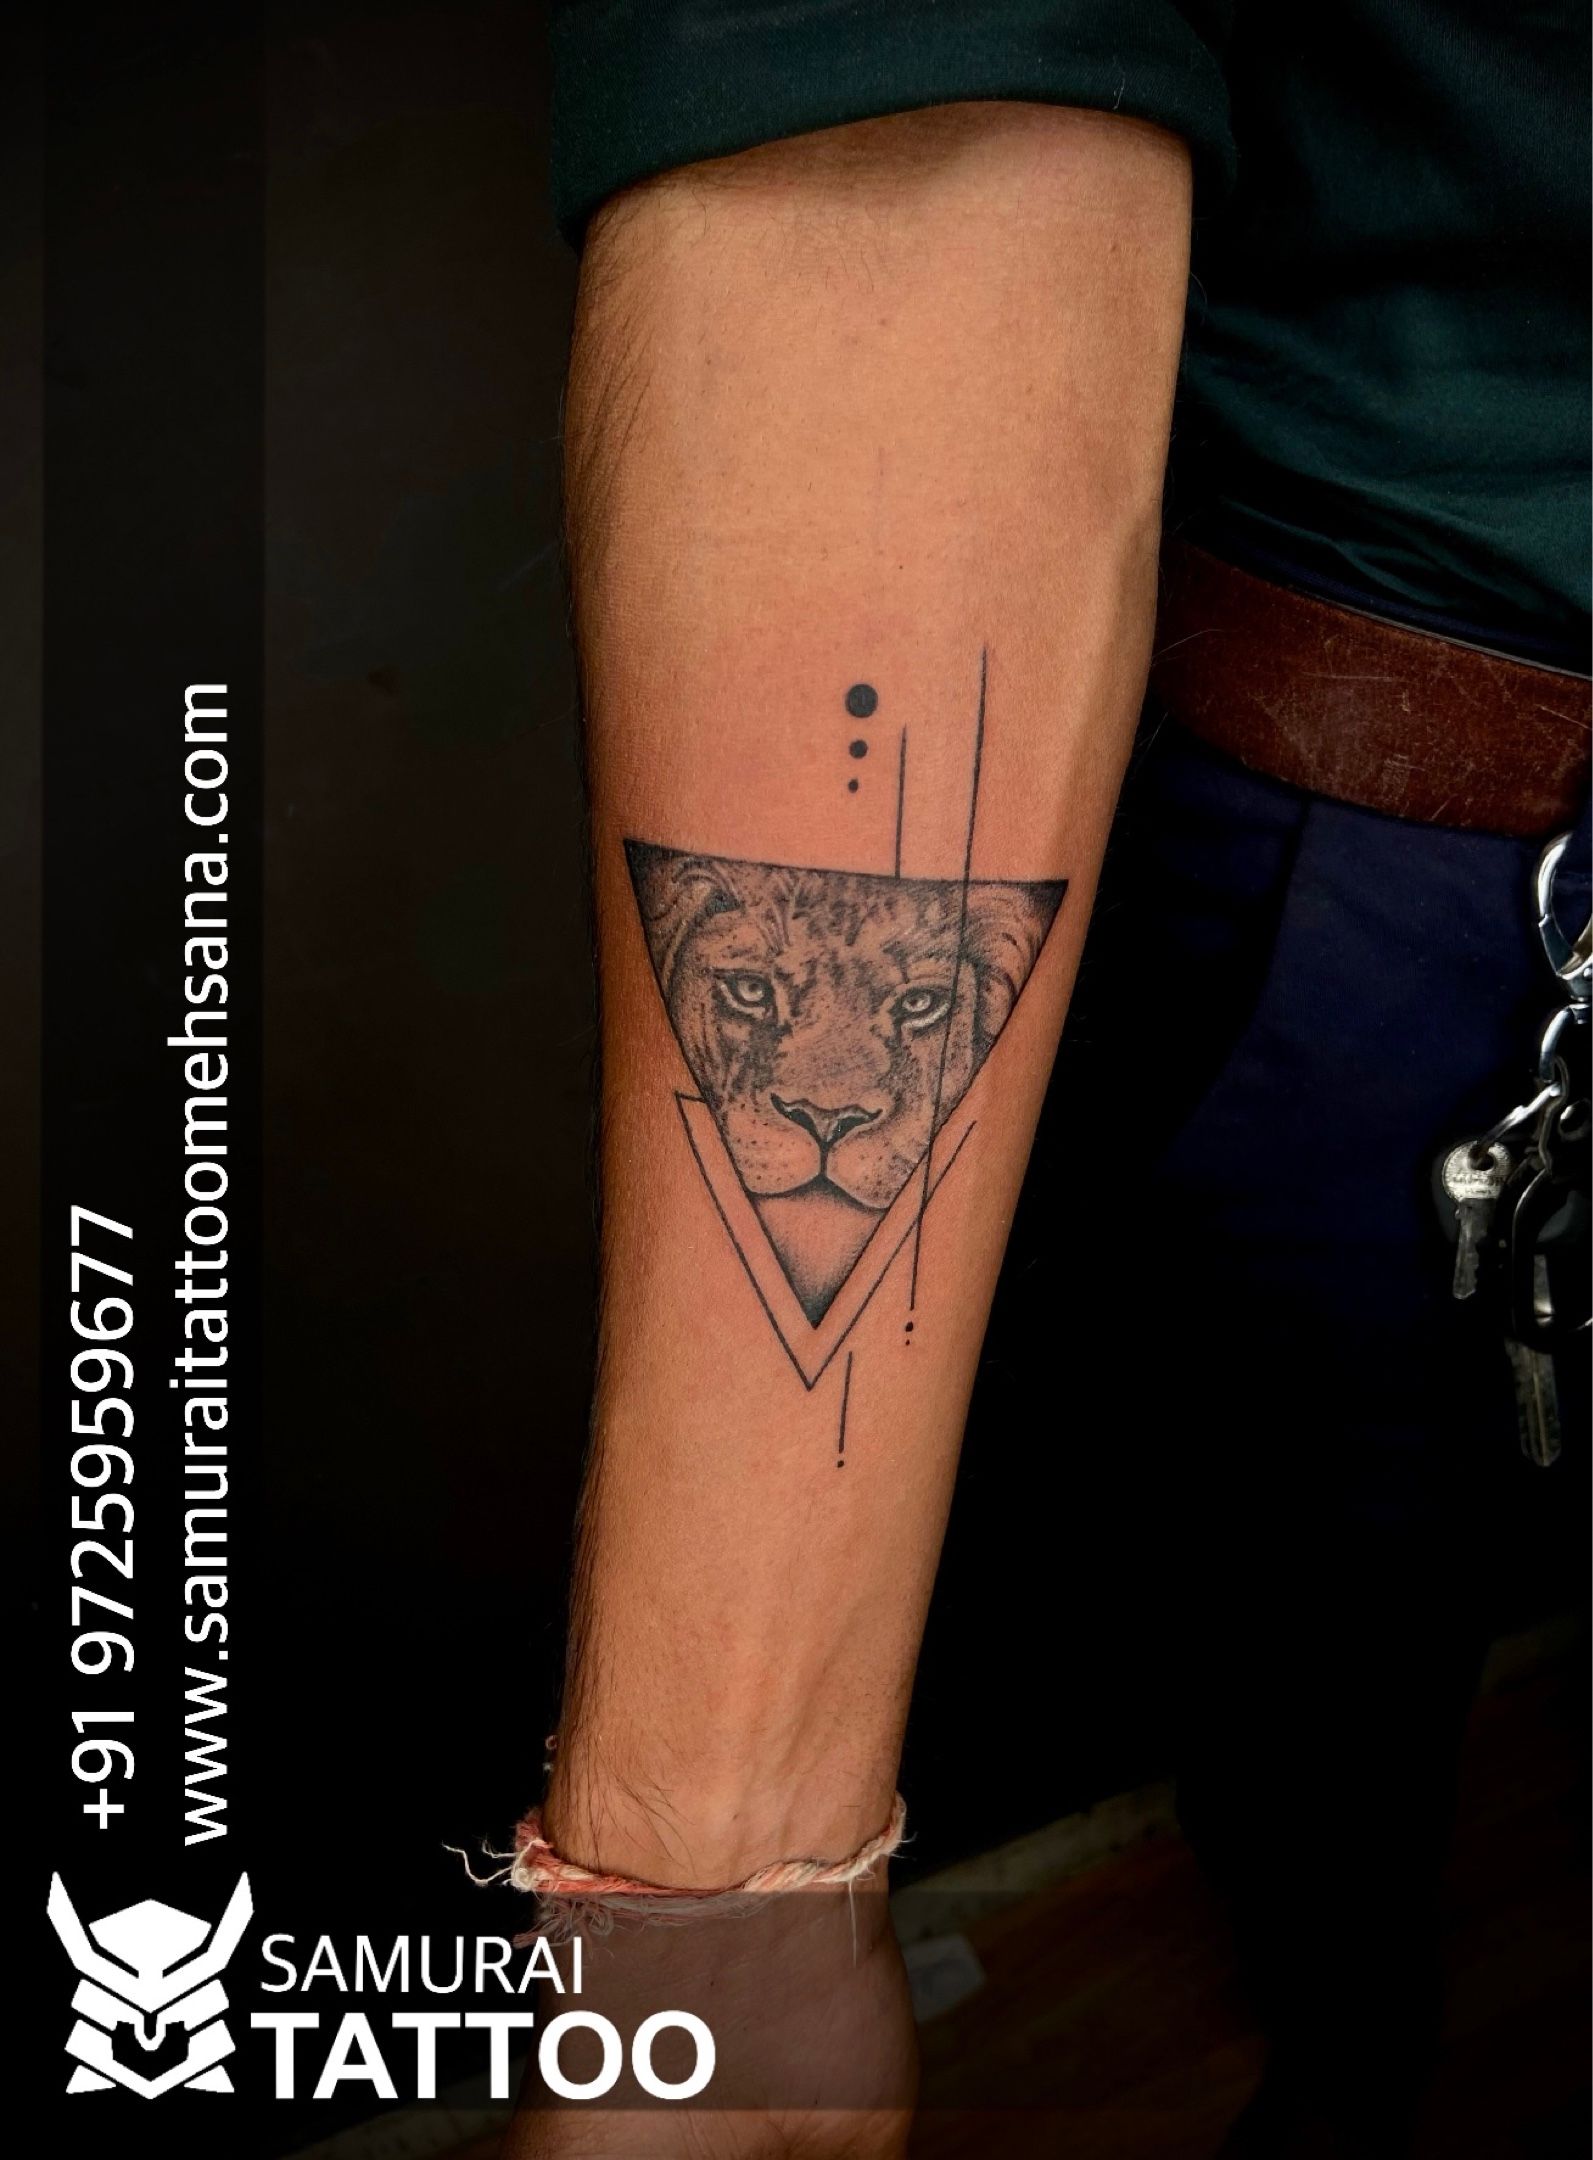 band tattoo design |Band tattoo ideas |Band tattoo |Hand band tattoo | Band tattoo  designs, Band tattoo, Tattoo designs